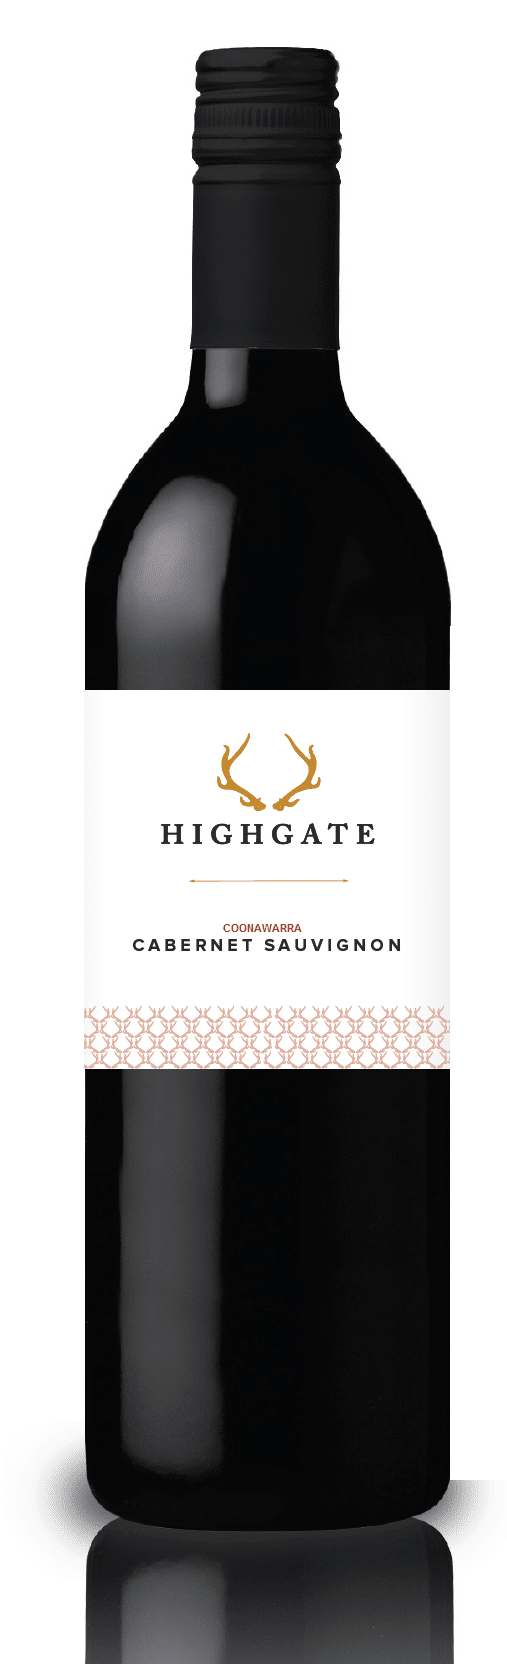 Highgate Cabernet Sauvignon, Coonawarra, 2017